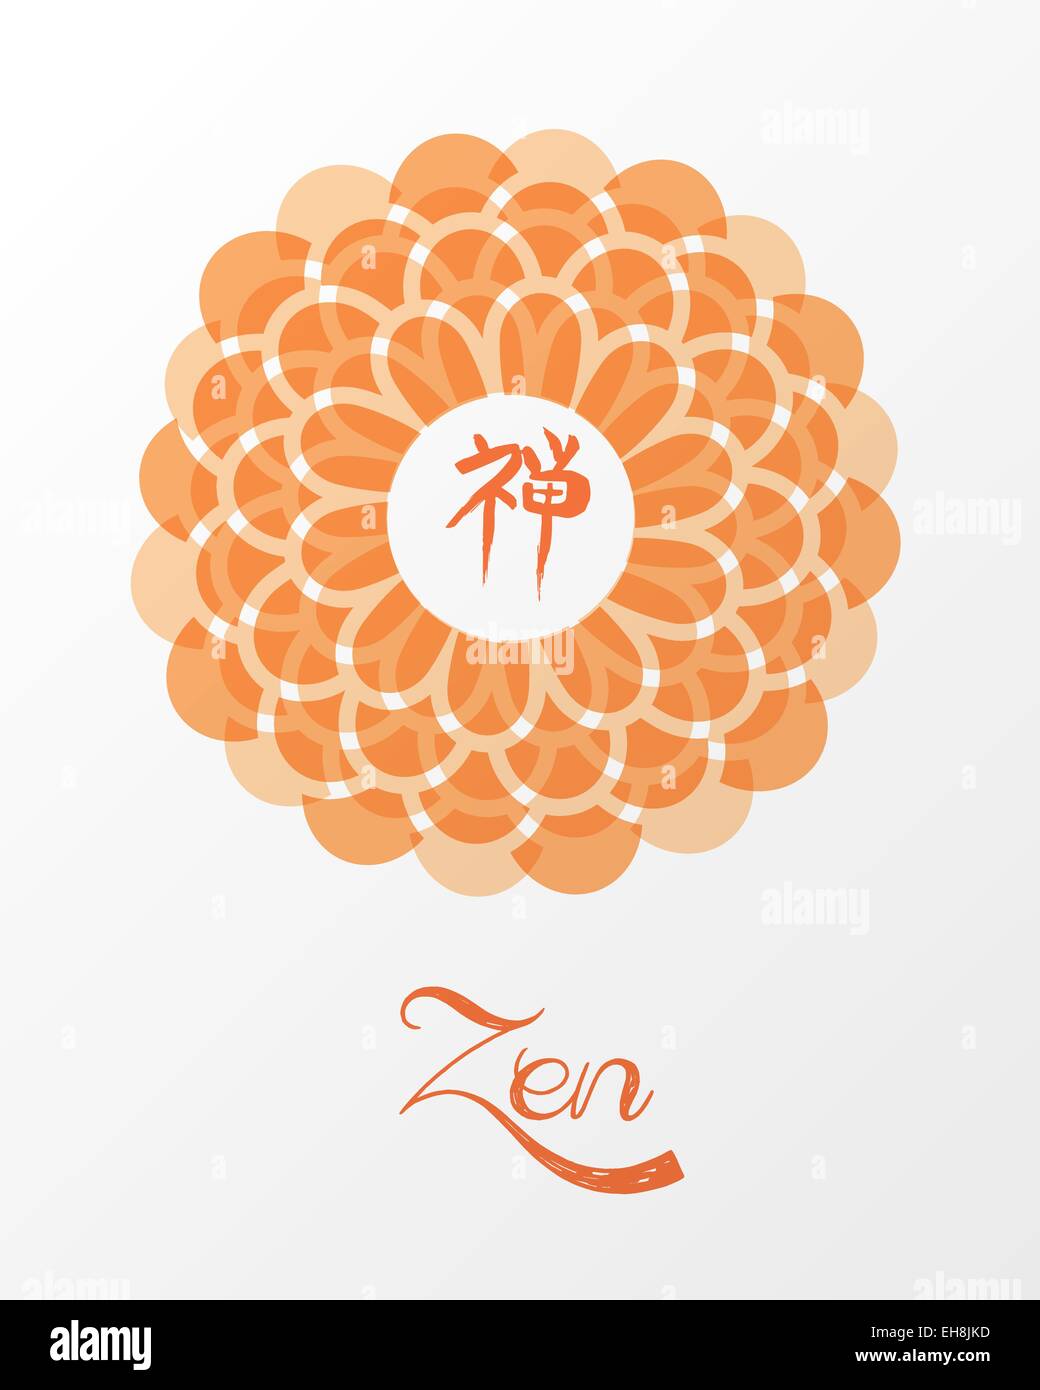 Meditation lotus flower and zen calligraphy concept illustration. EPS10 vector. Stock Vector